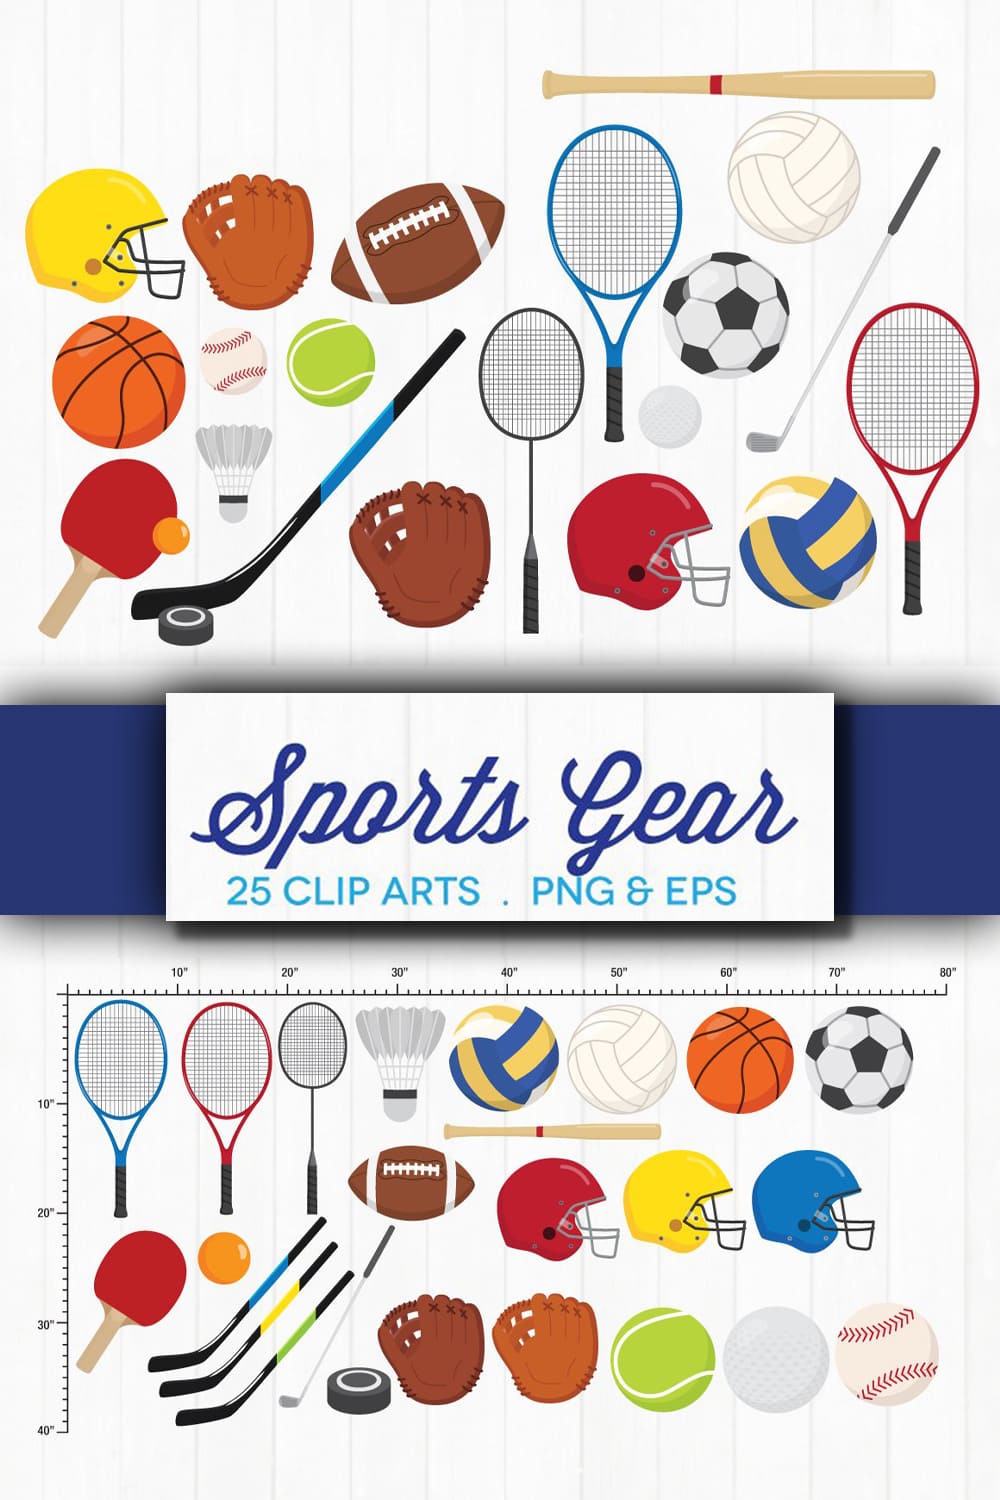 Sports Gear Clip Art - pinterest image preview.